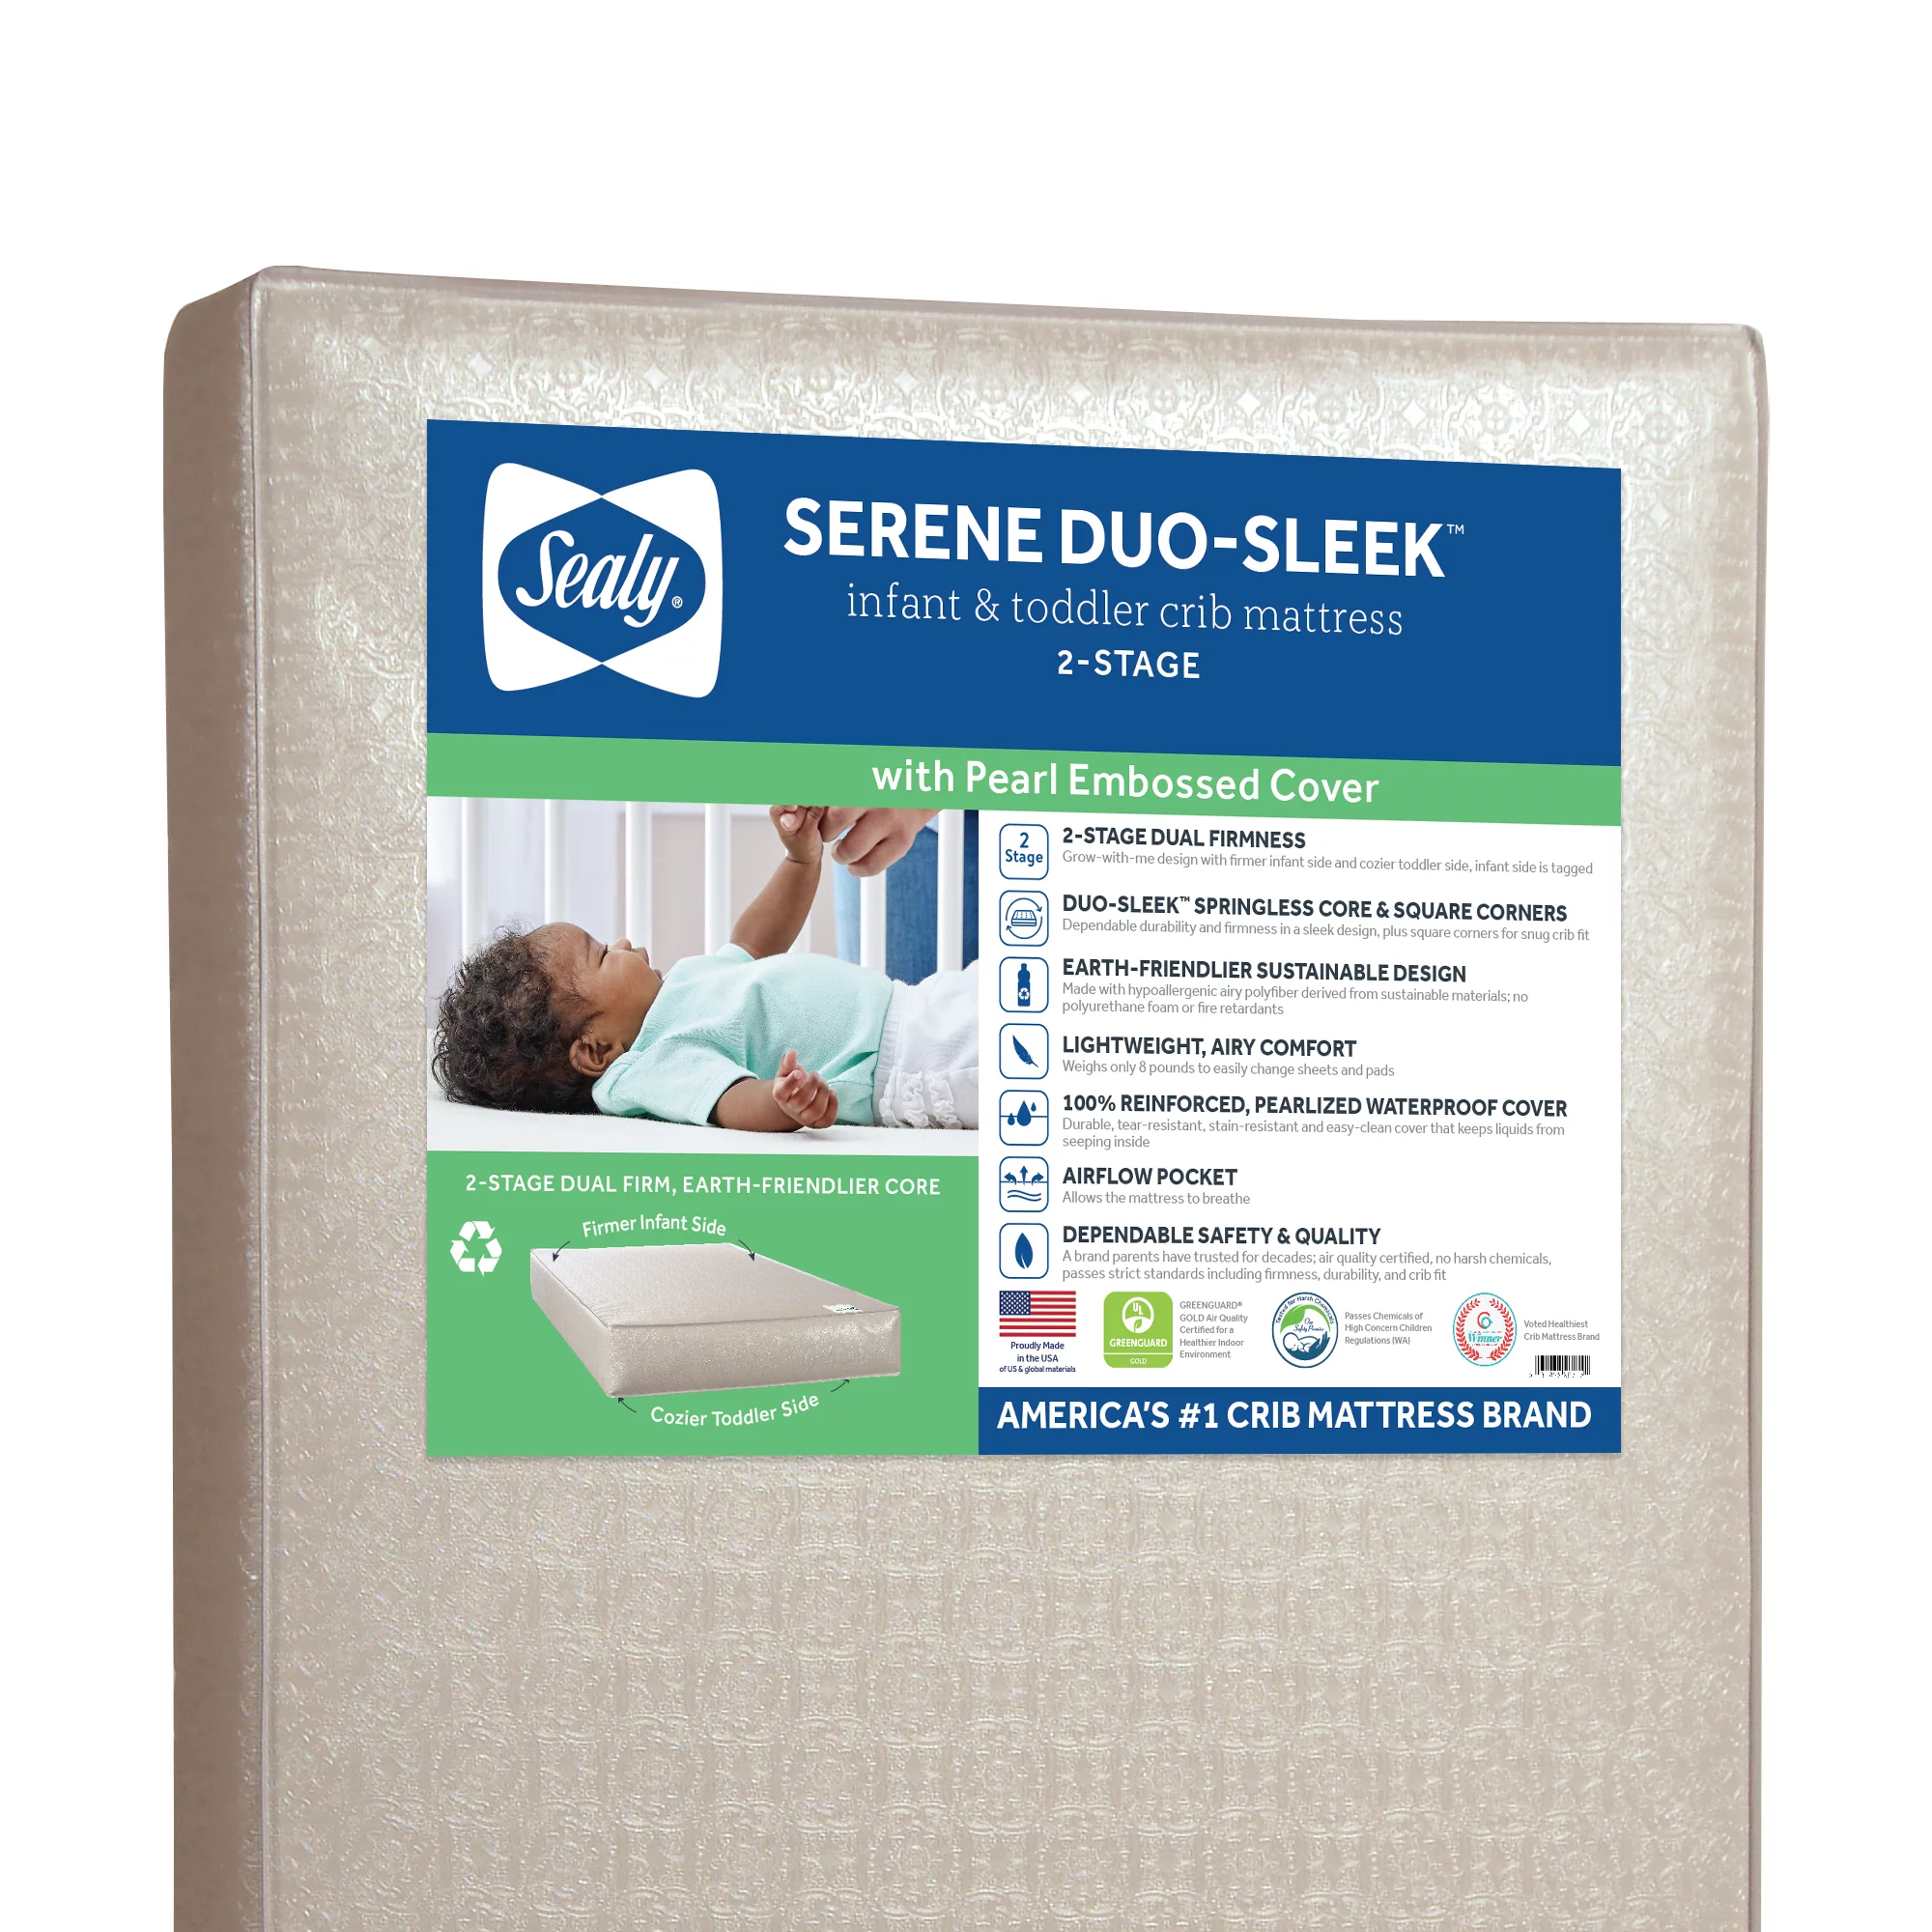 Sealy Serene Duo Sleek Ultra-Premium 2-Stage, Sustainable Foam, Crib & Toddler Mattress, 6 inch